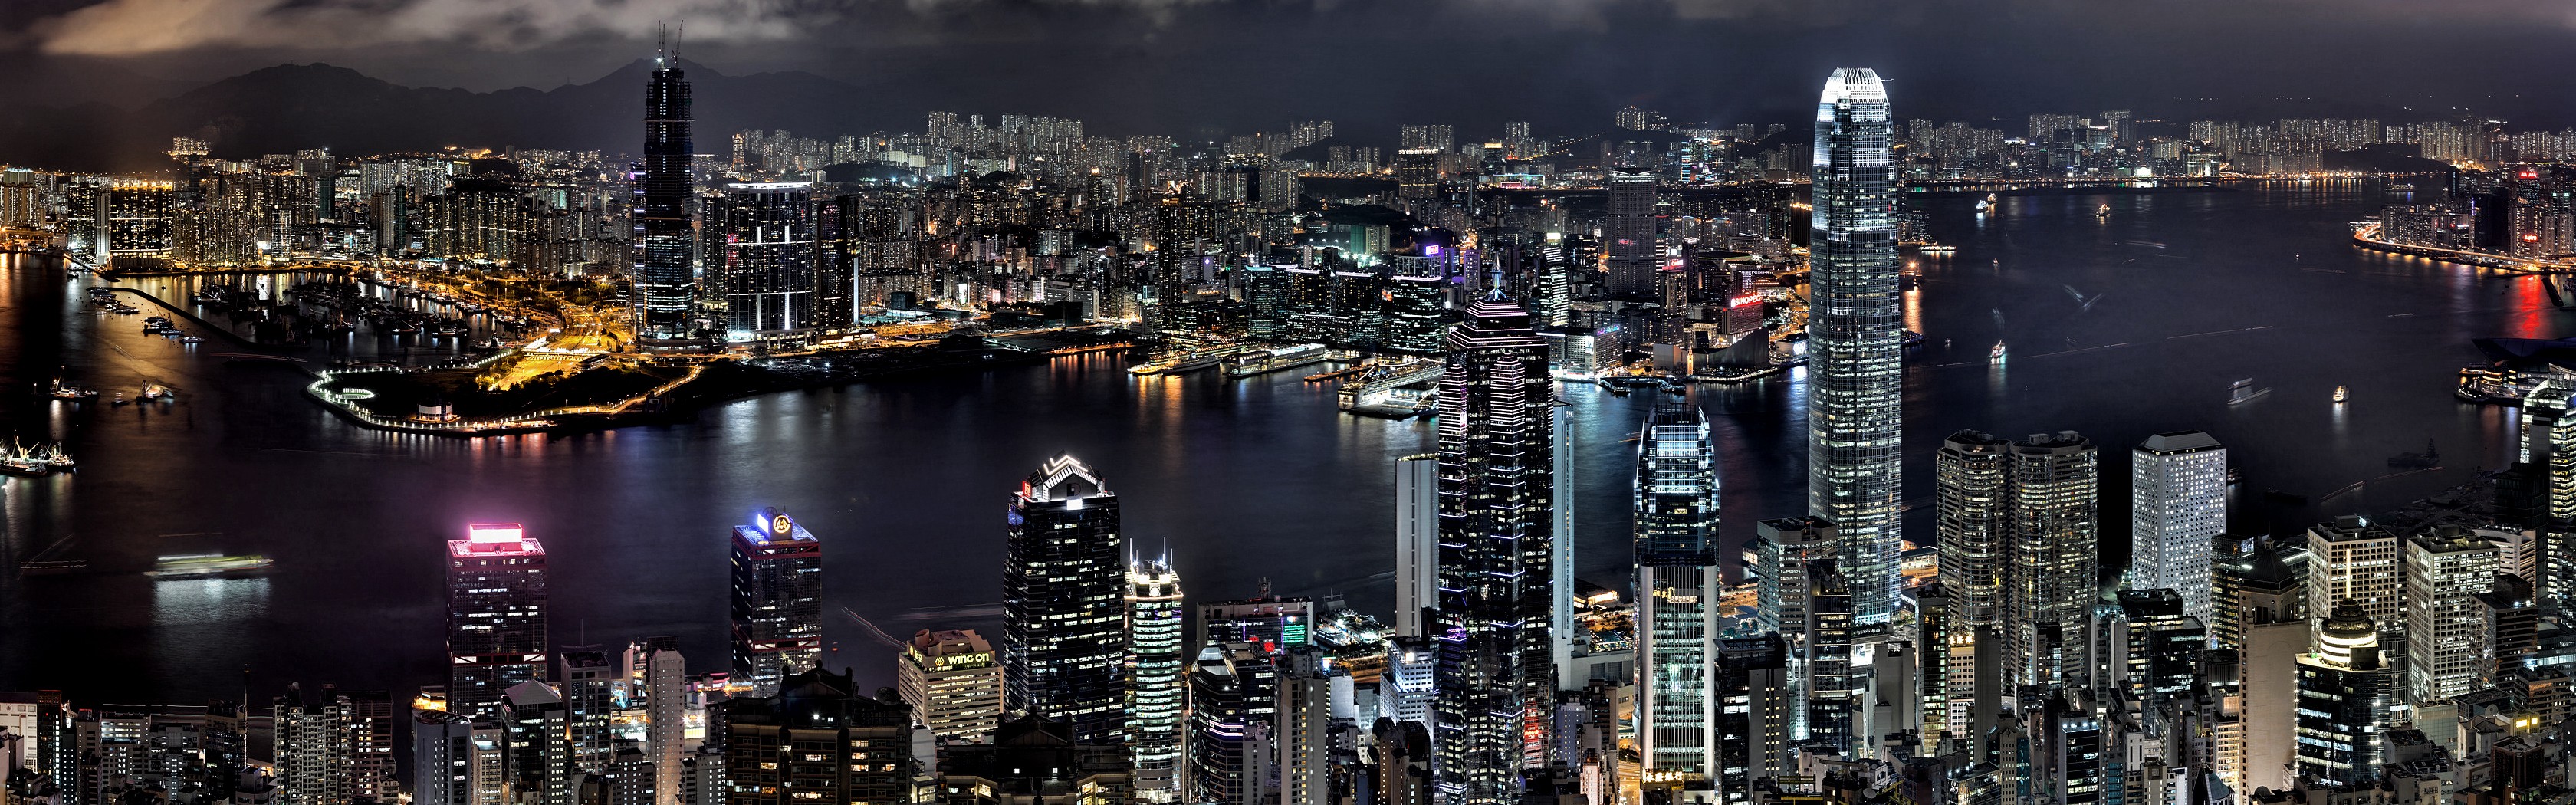 General 3360x1050 Hong Kong landscape city night sky cityscape China Asia city lights